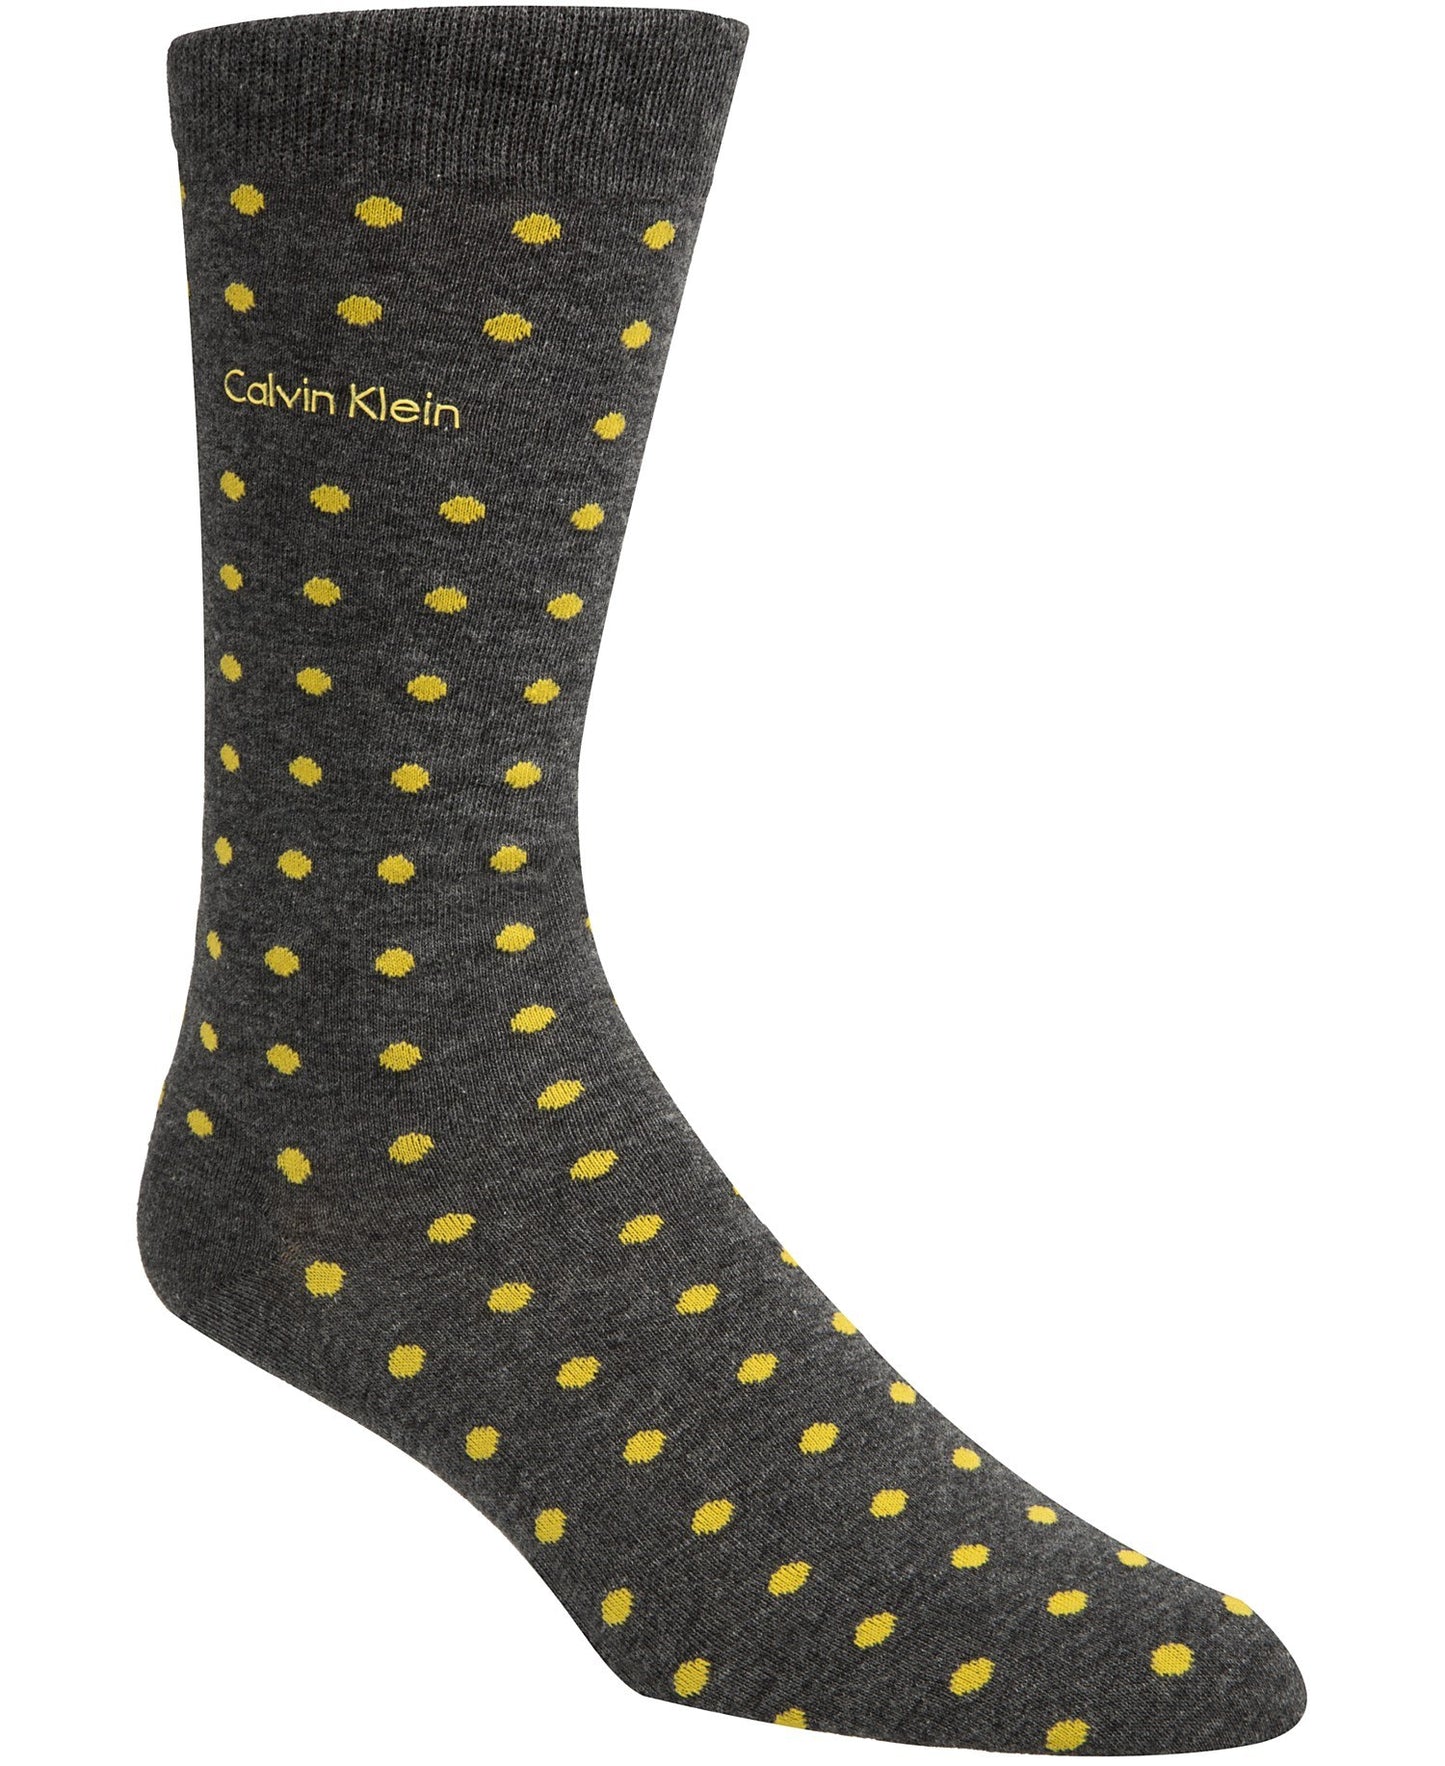 Calvin Klein Mens Polka Dot Dress Socks Yellow